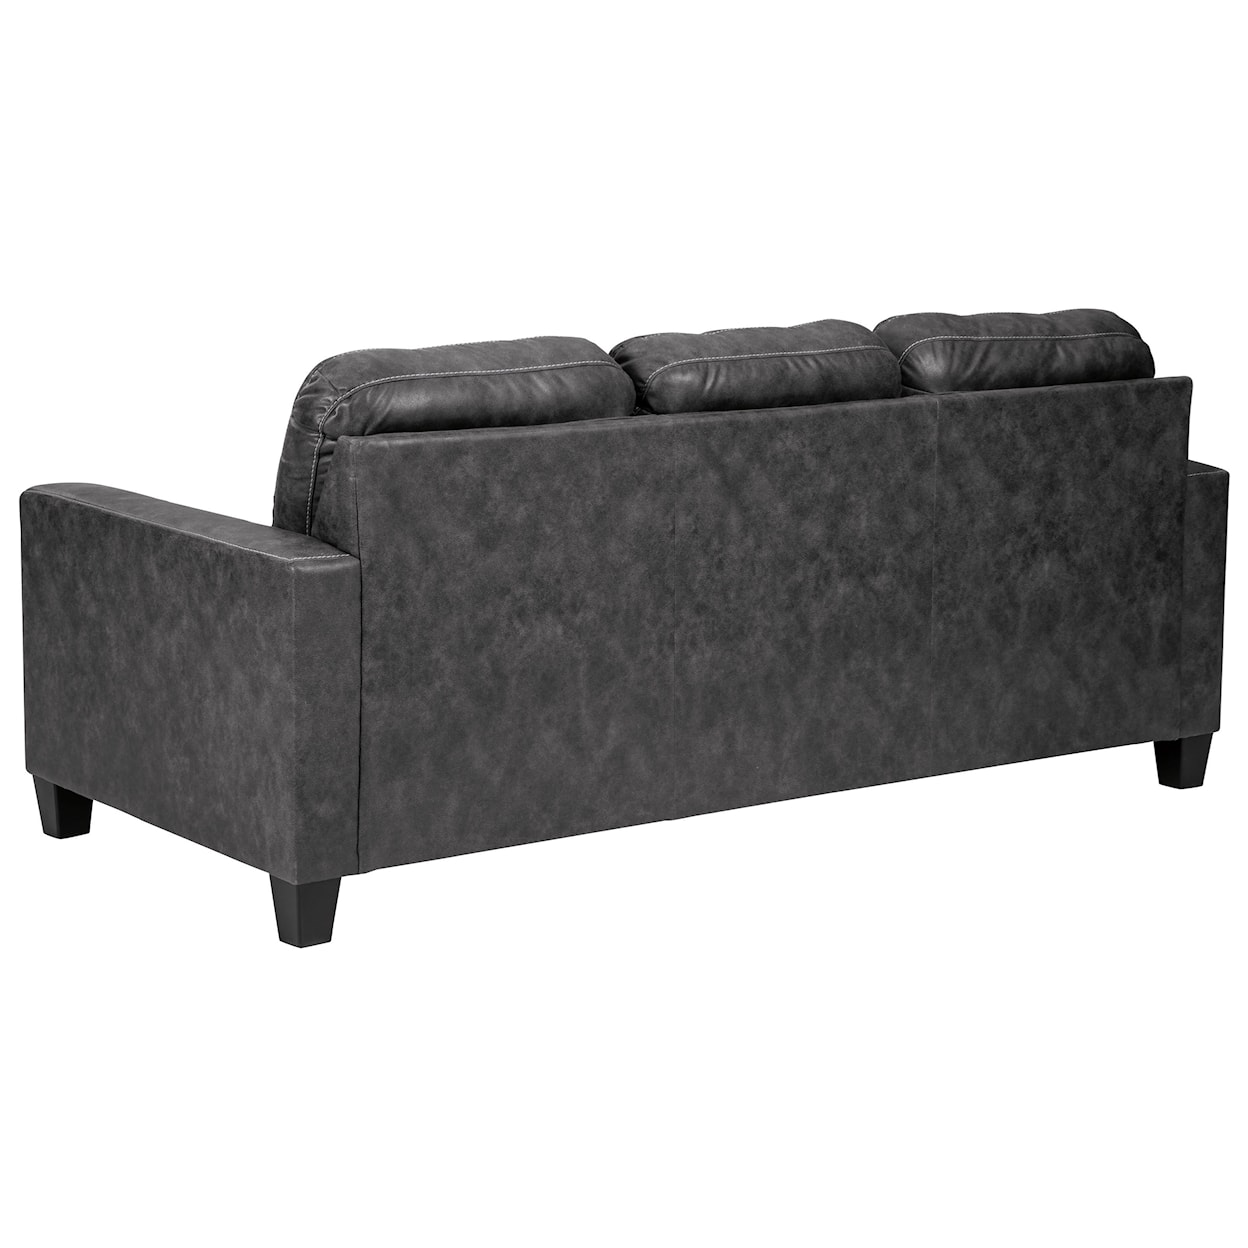 Ashley Furniture Benchcraft Venaldi Sofa with Chaise